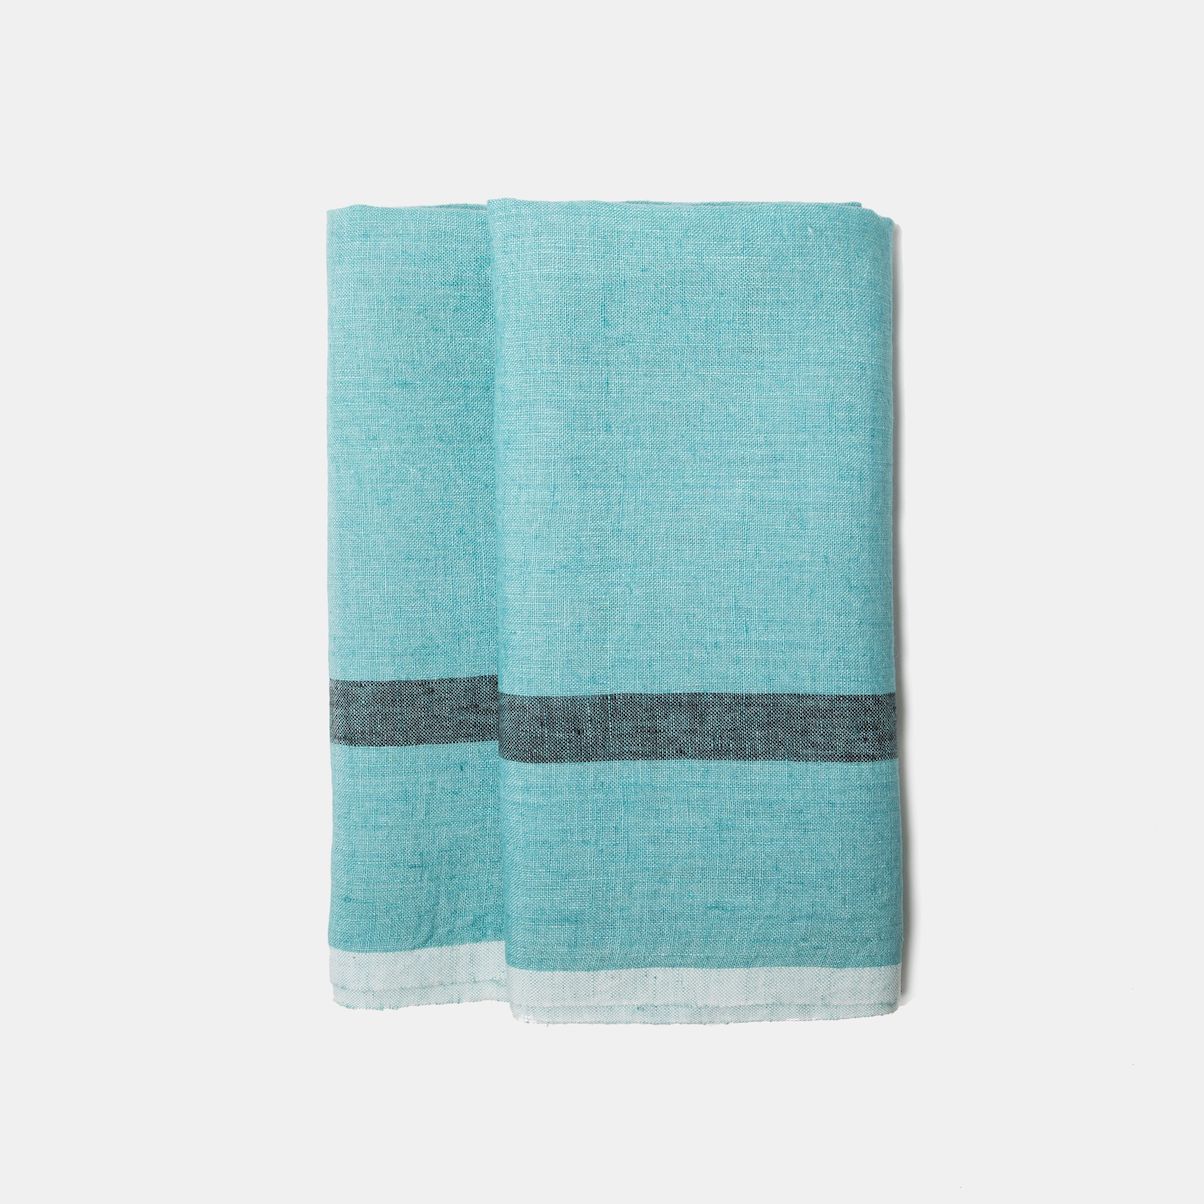 Laundered Linen Kitchen Towels Aqua & Charcoal, Set of 2